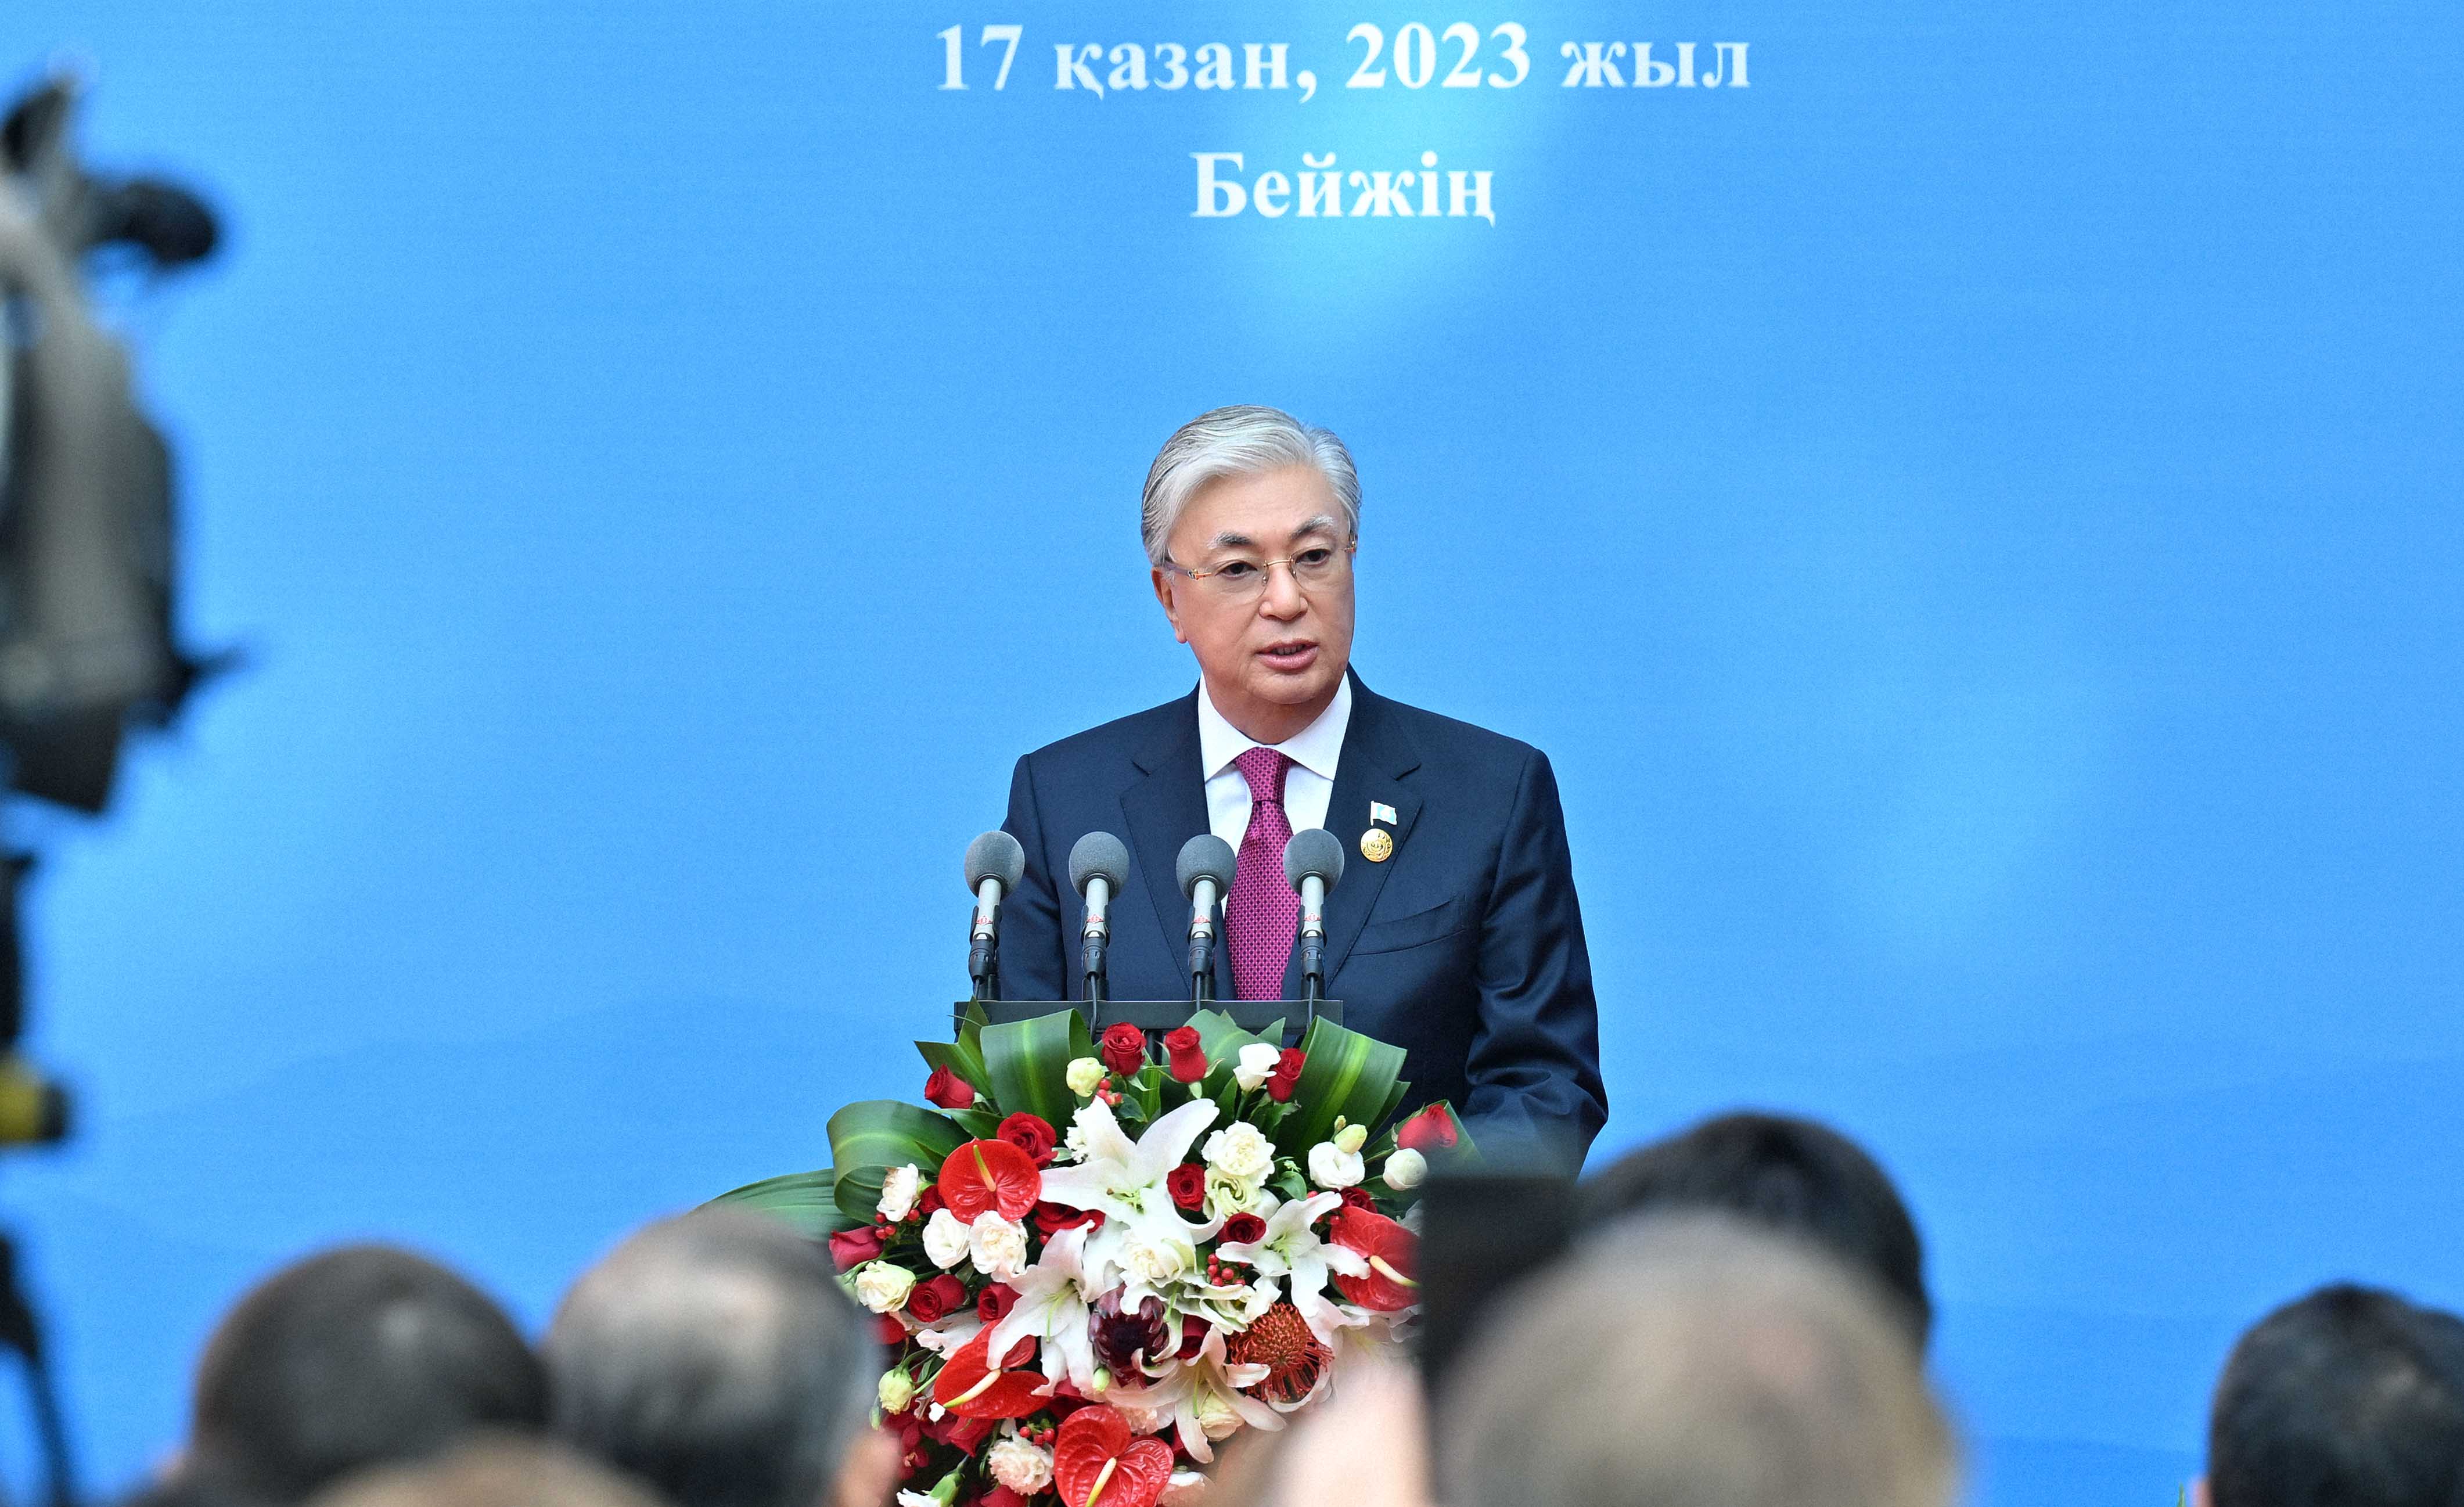 President Tokayev commemorates Al-Farabi's 1150th anniversary at Beijing University event, bolstering Kazakhstan-China relations 